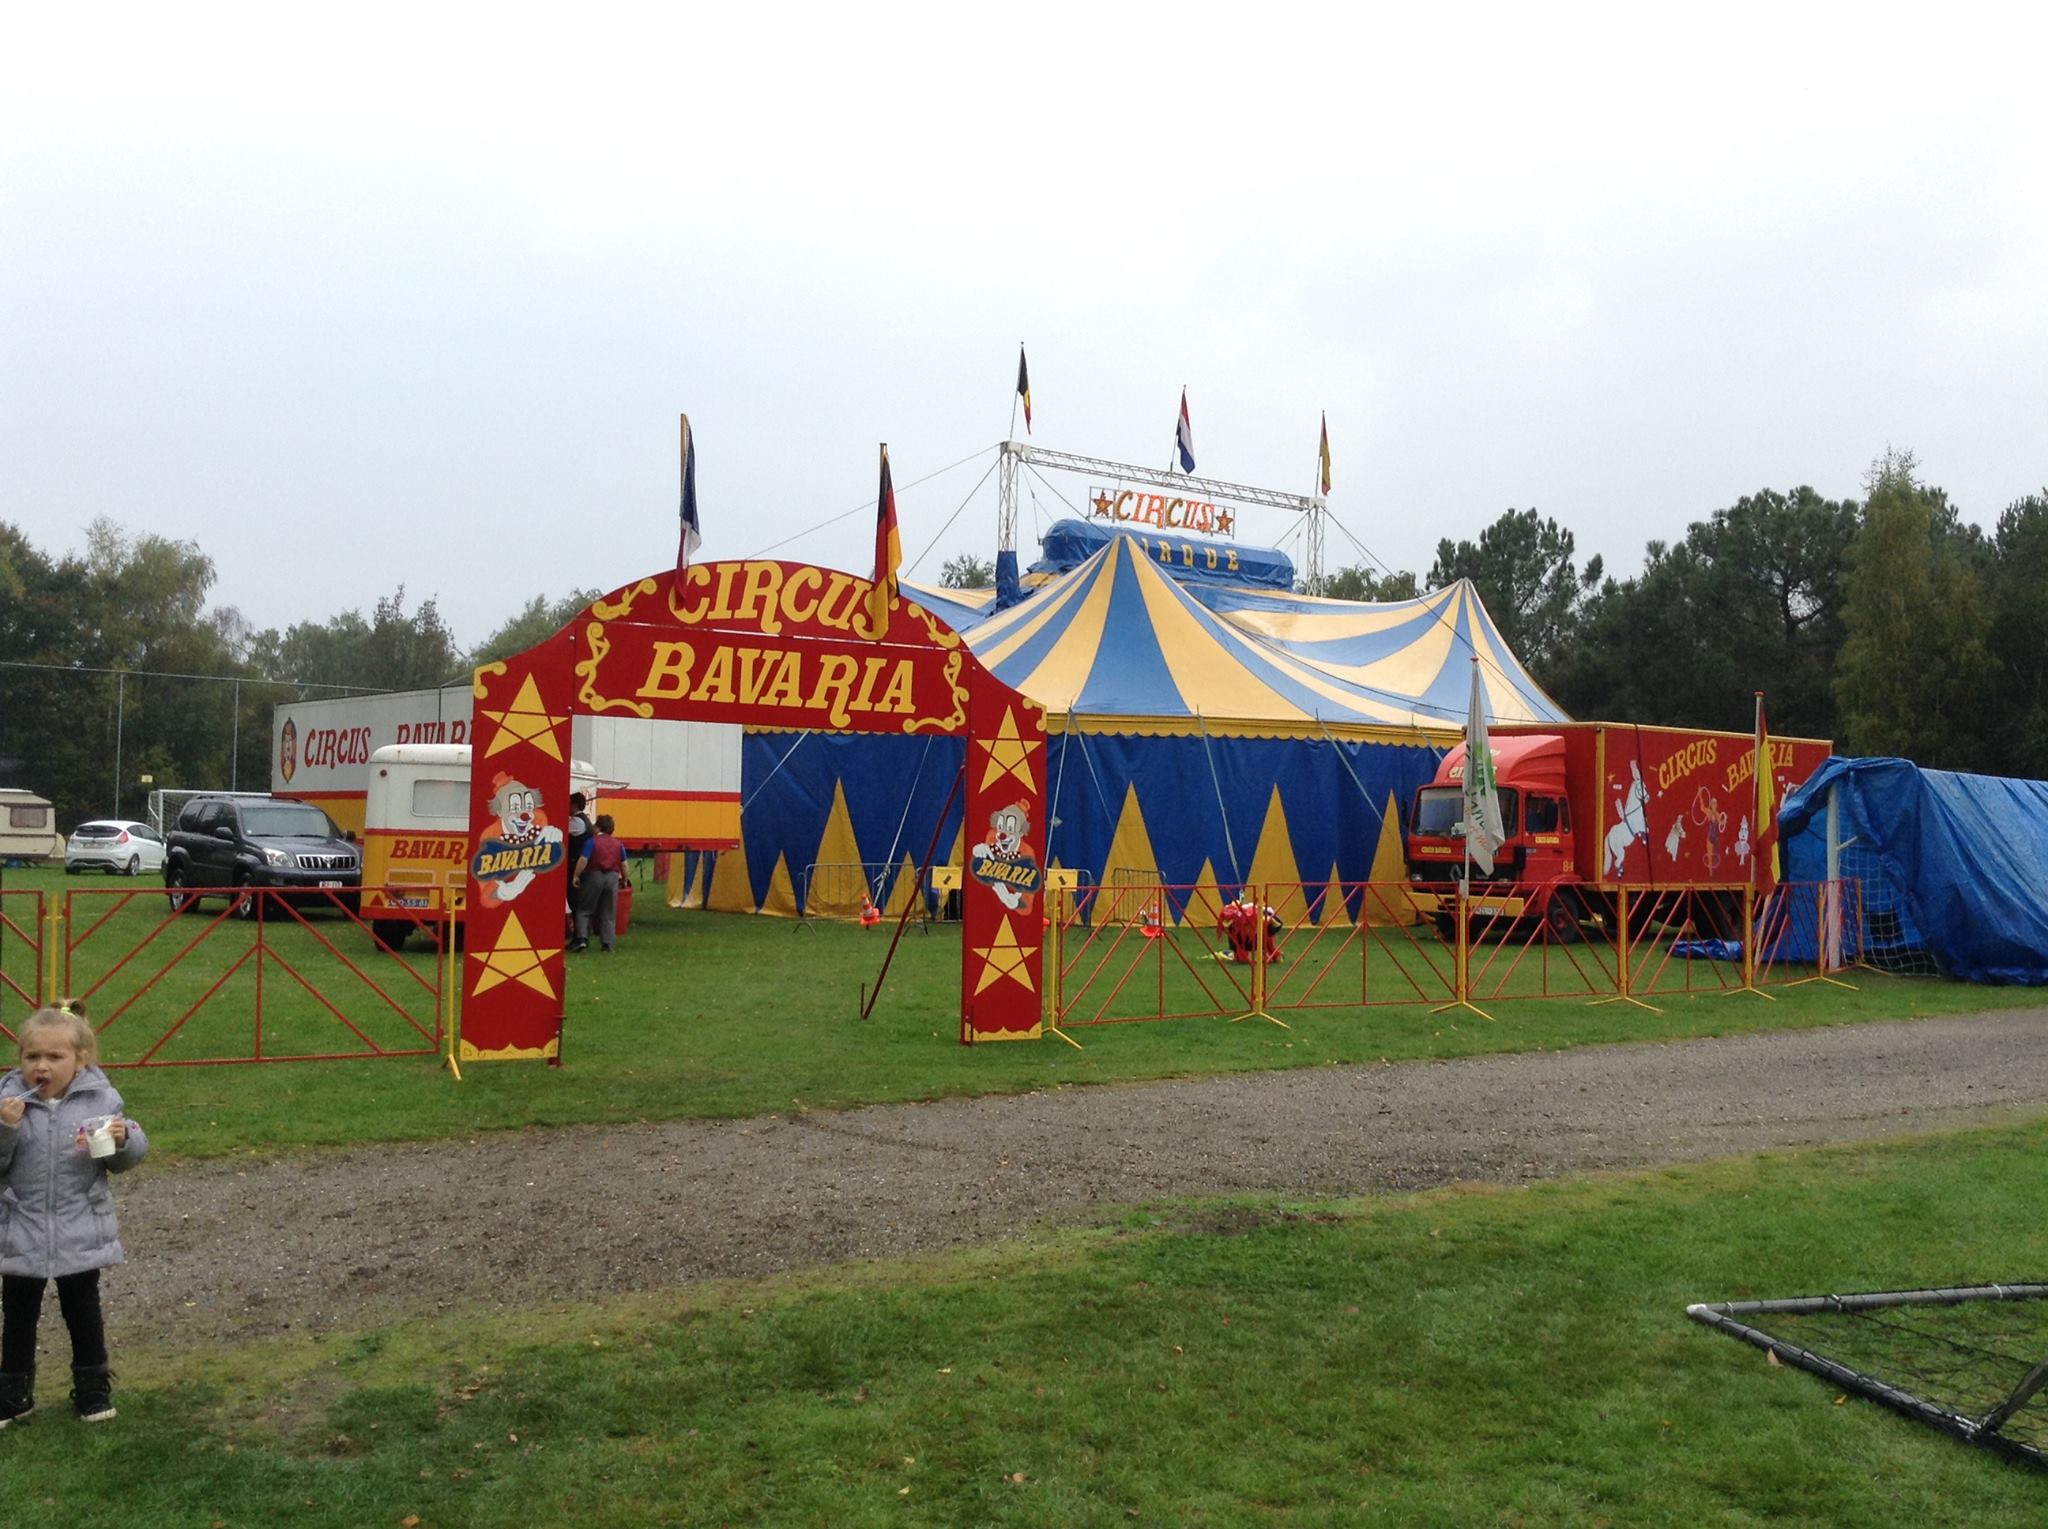 Circus Bavaria front